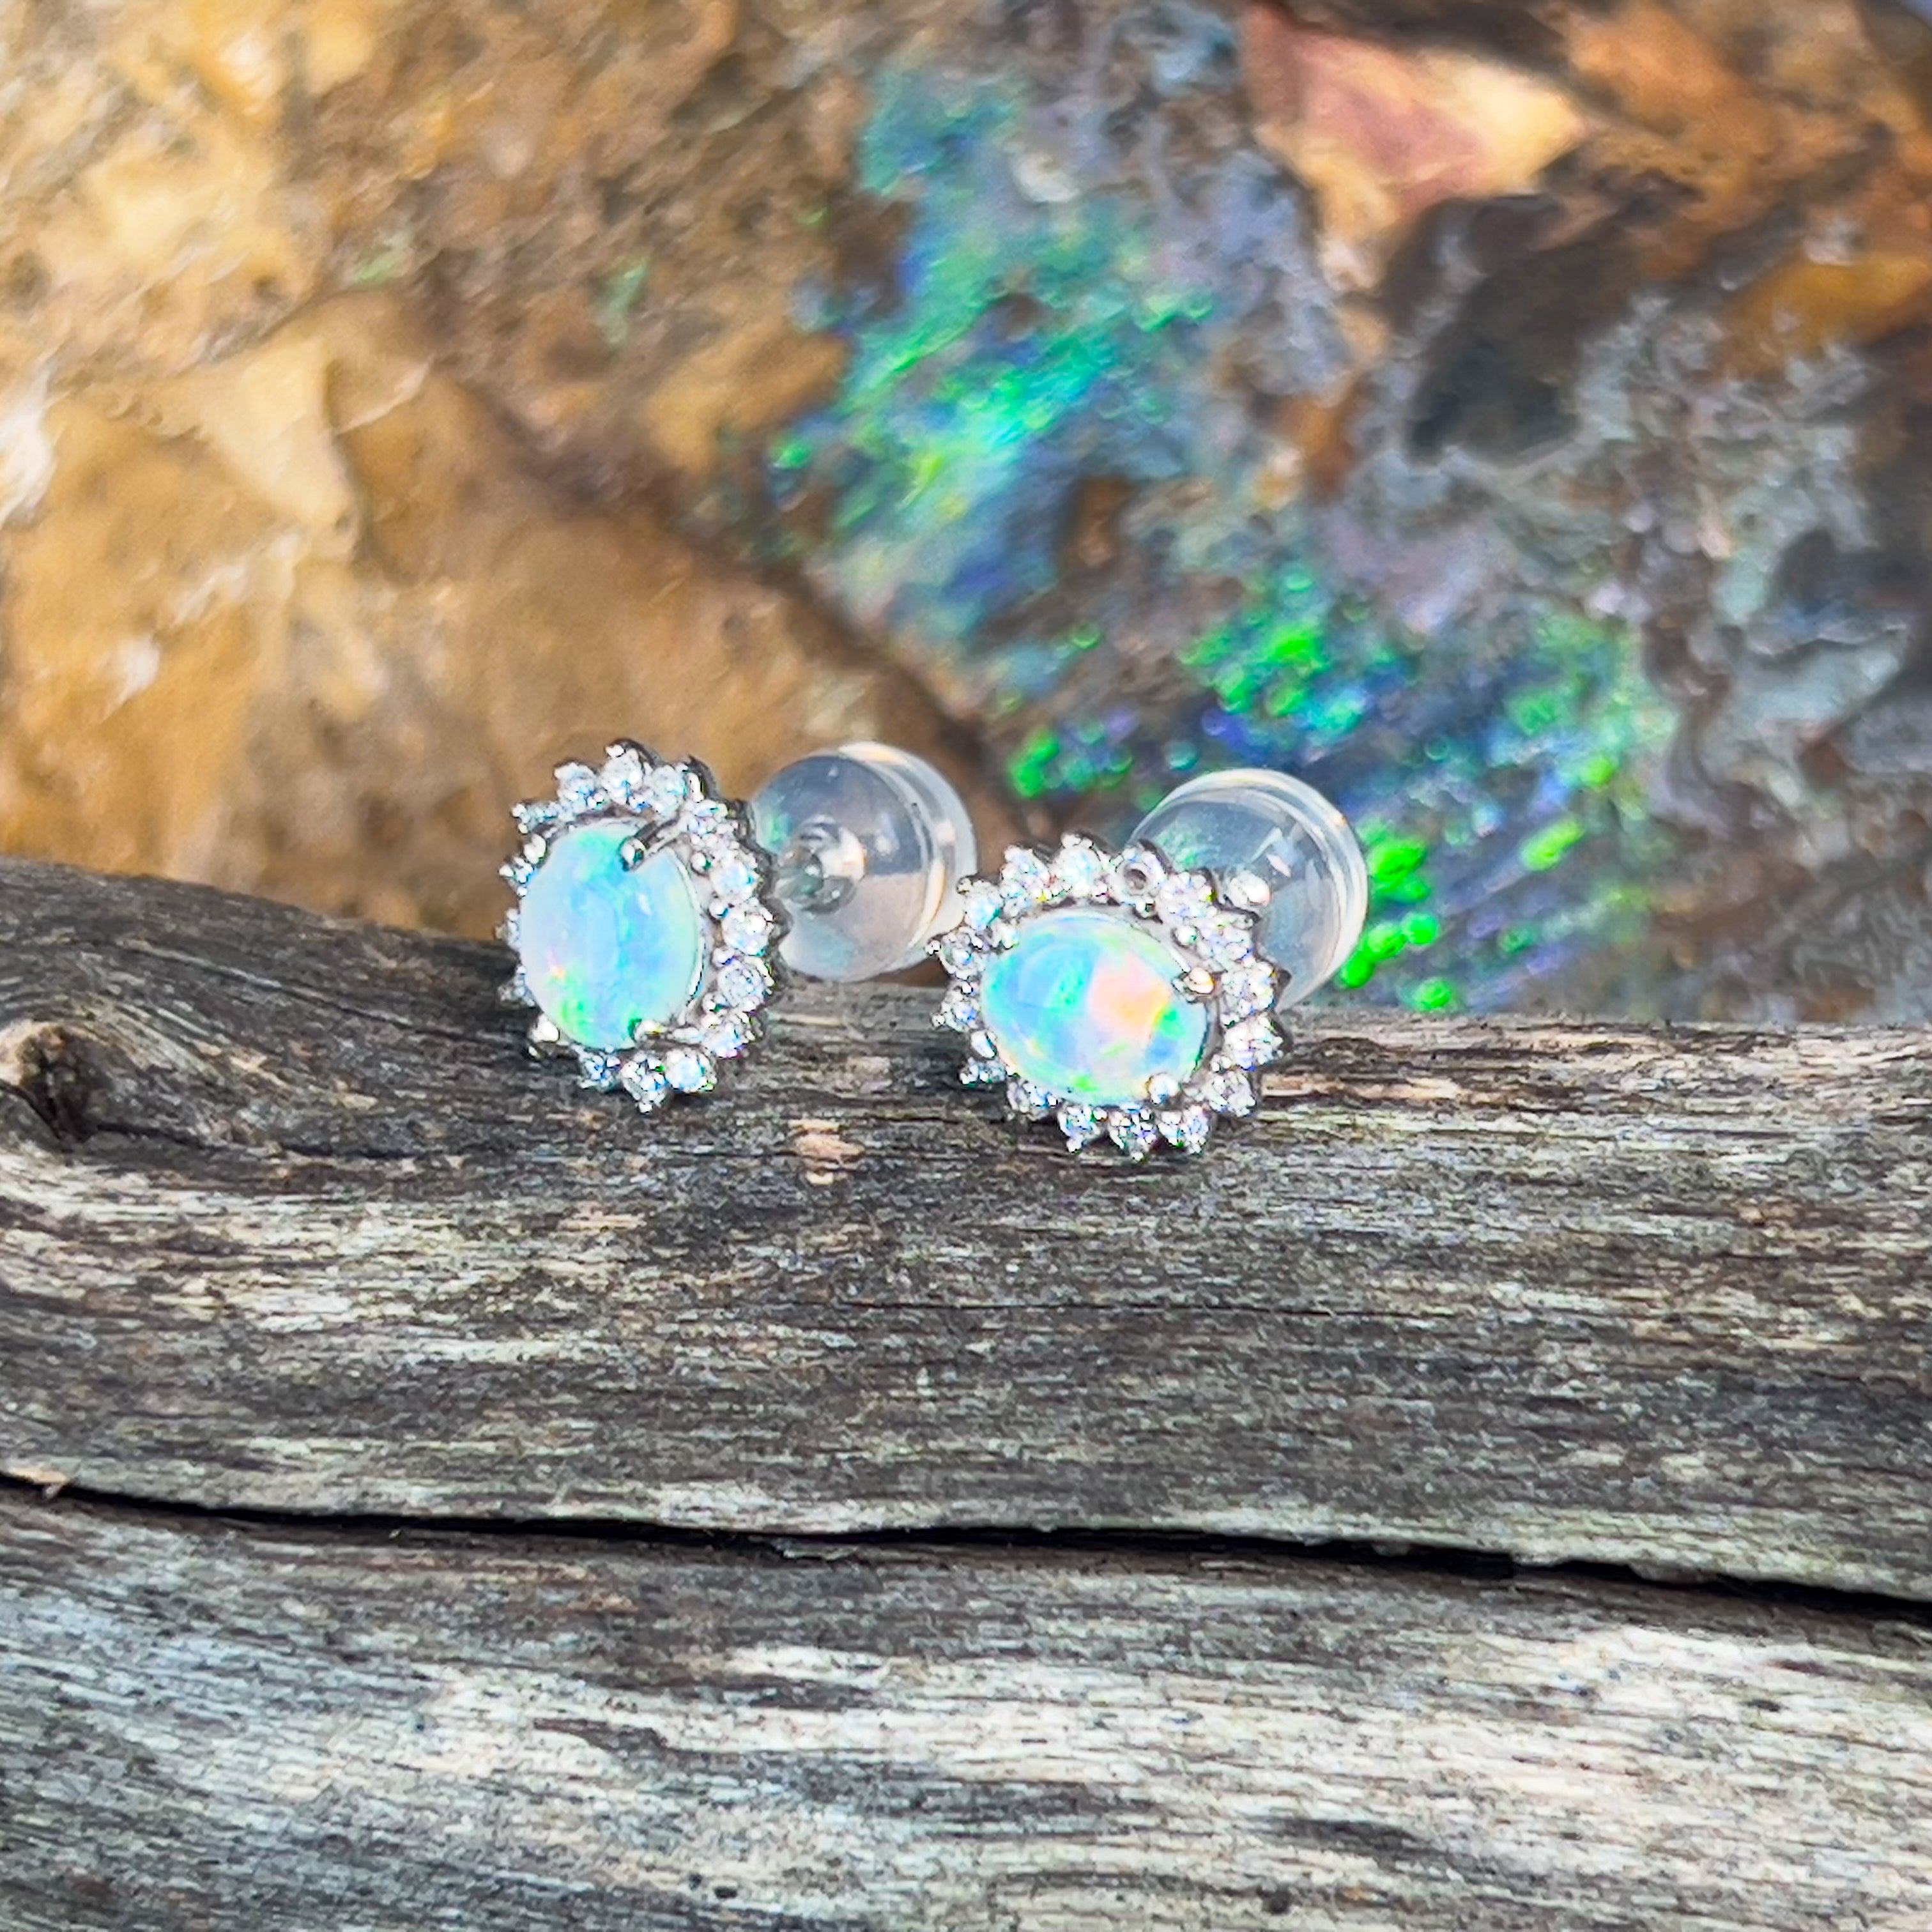 9kt White Gold pair of Opal and Diamond cluster earrings - Masterpiece Jewellery Opal & Gems Sydney Australia | Online Shop